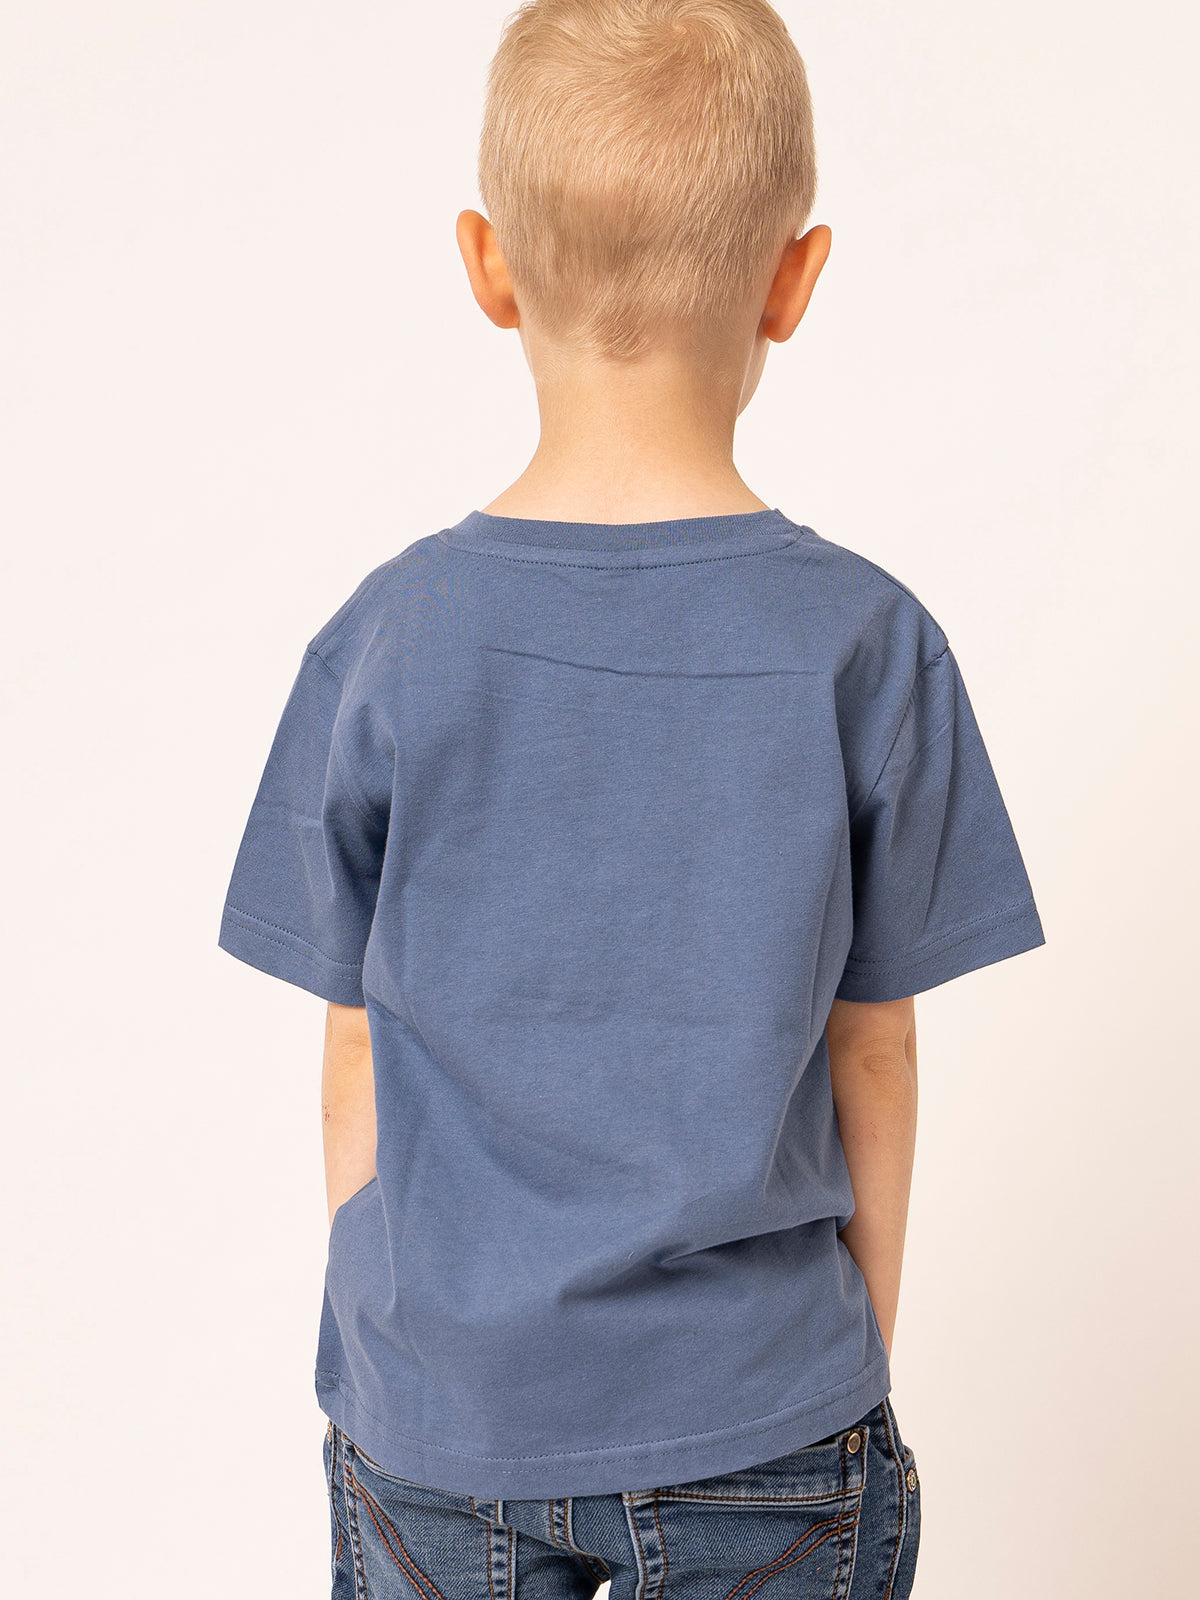 Blue children's t-shirt with Balaton pattern